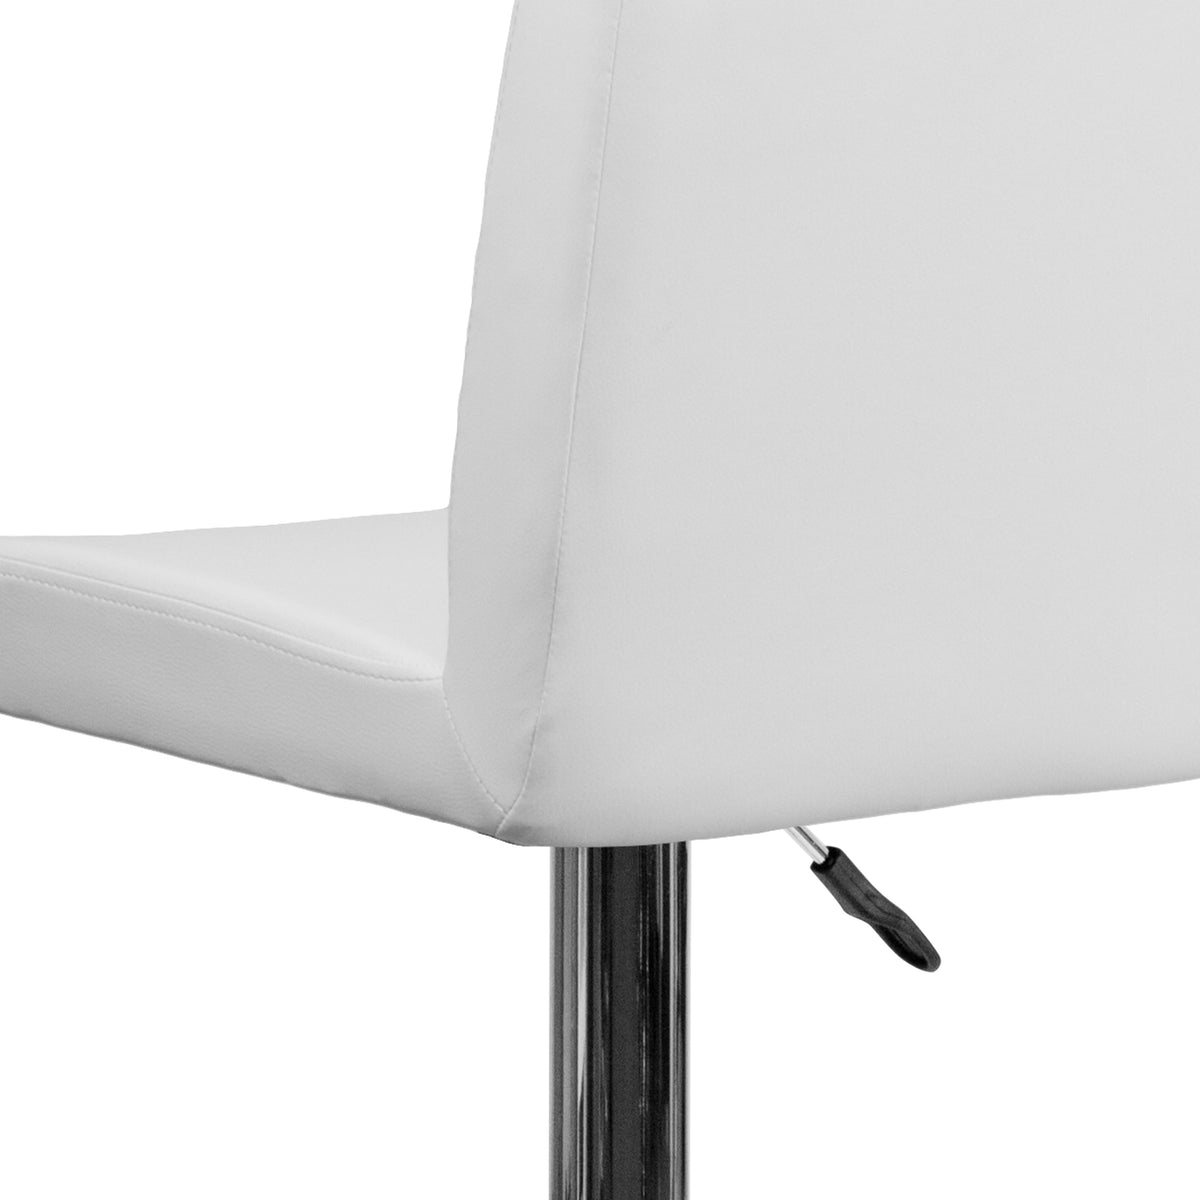 White |#| White Vinyl Adjustable Height Barstool with Panel Back and Chrome Base